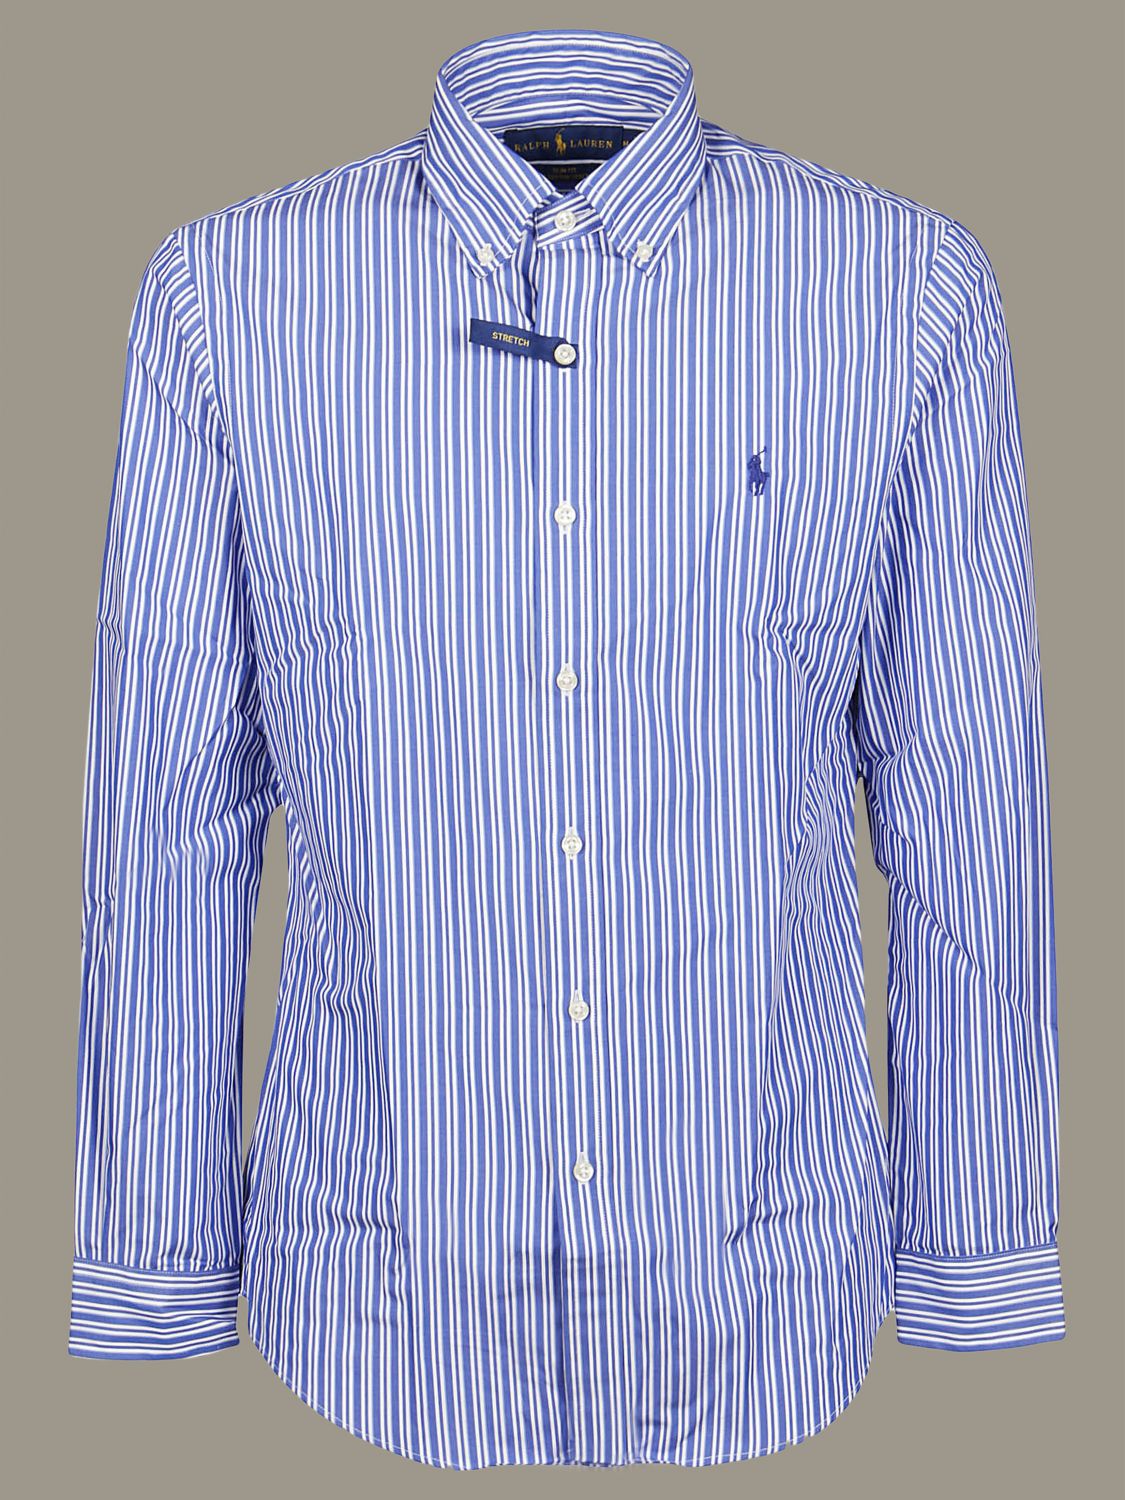 Earliest Flash delinquency Polo Ralph Lauren Outlet: Shirt men - Striped | Shirt Polo Ralph Lauren  710787320 GIGLIO.COM